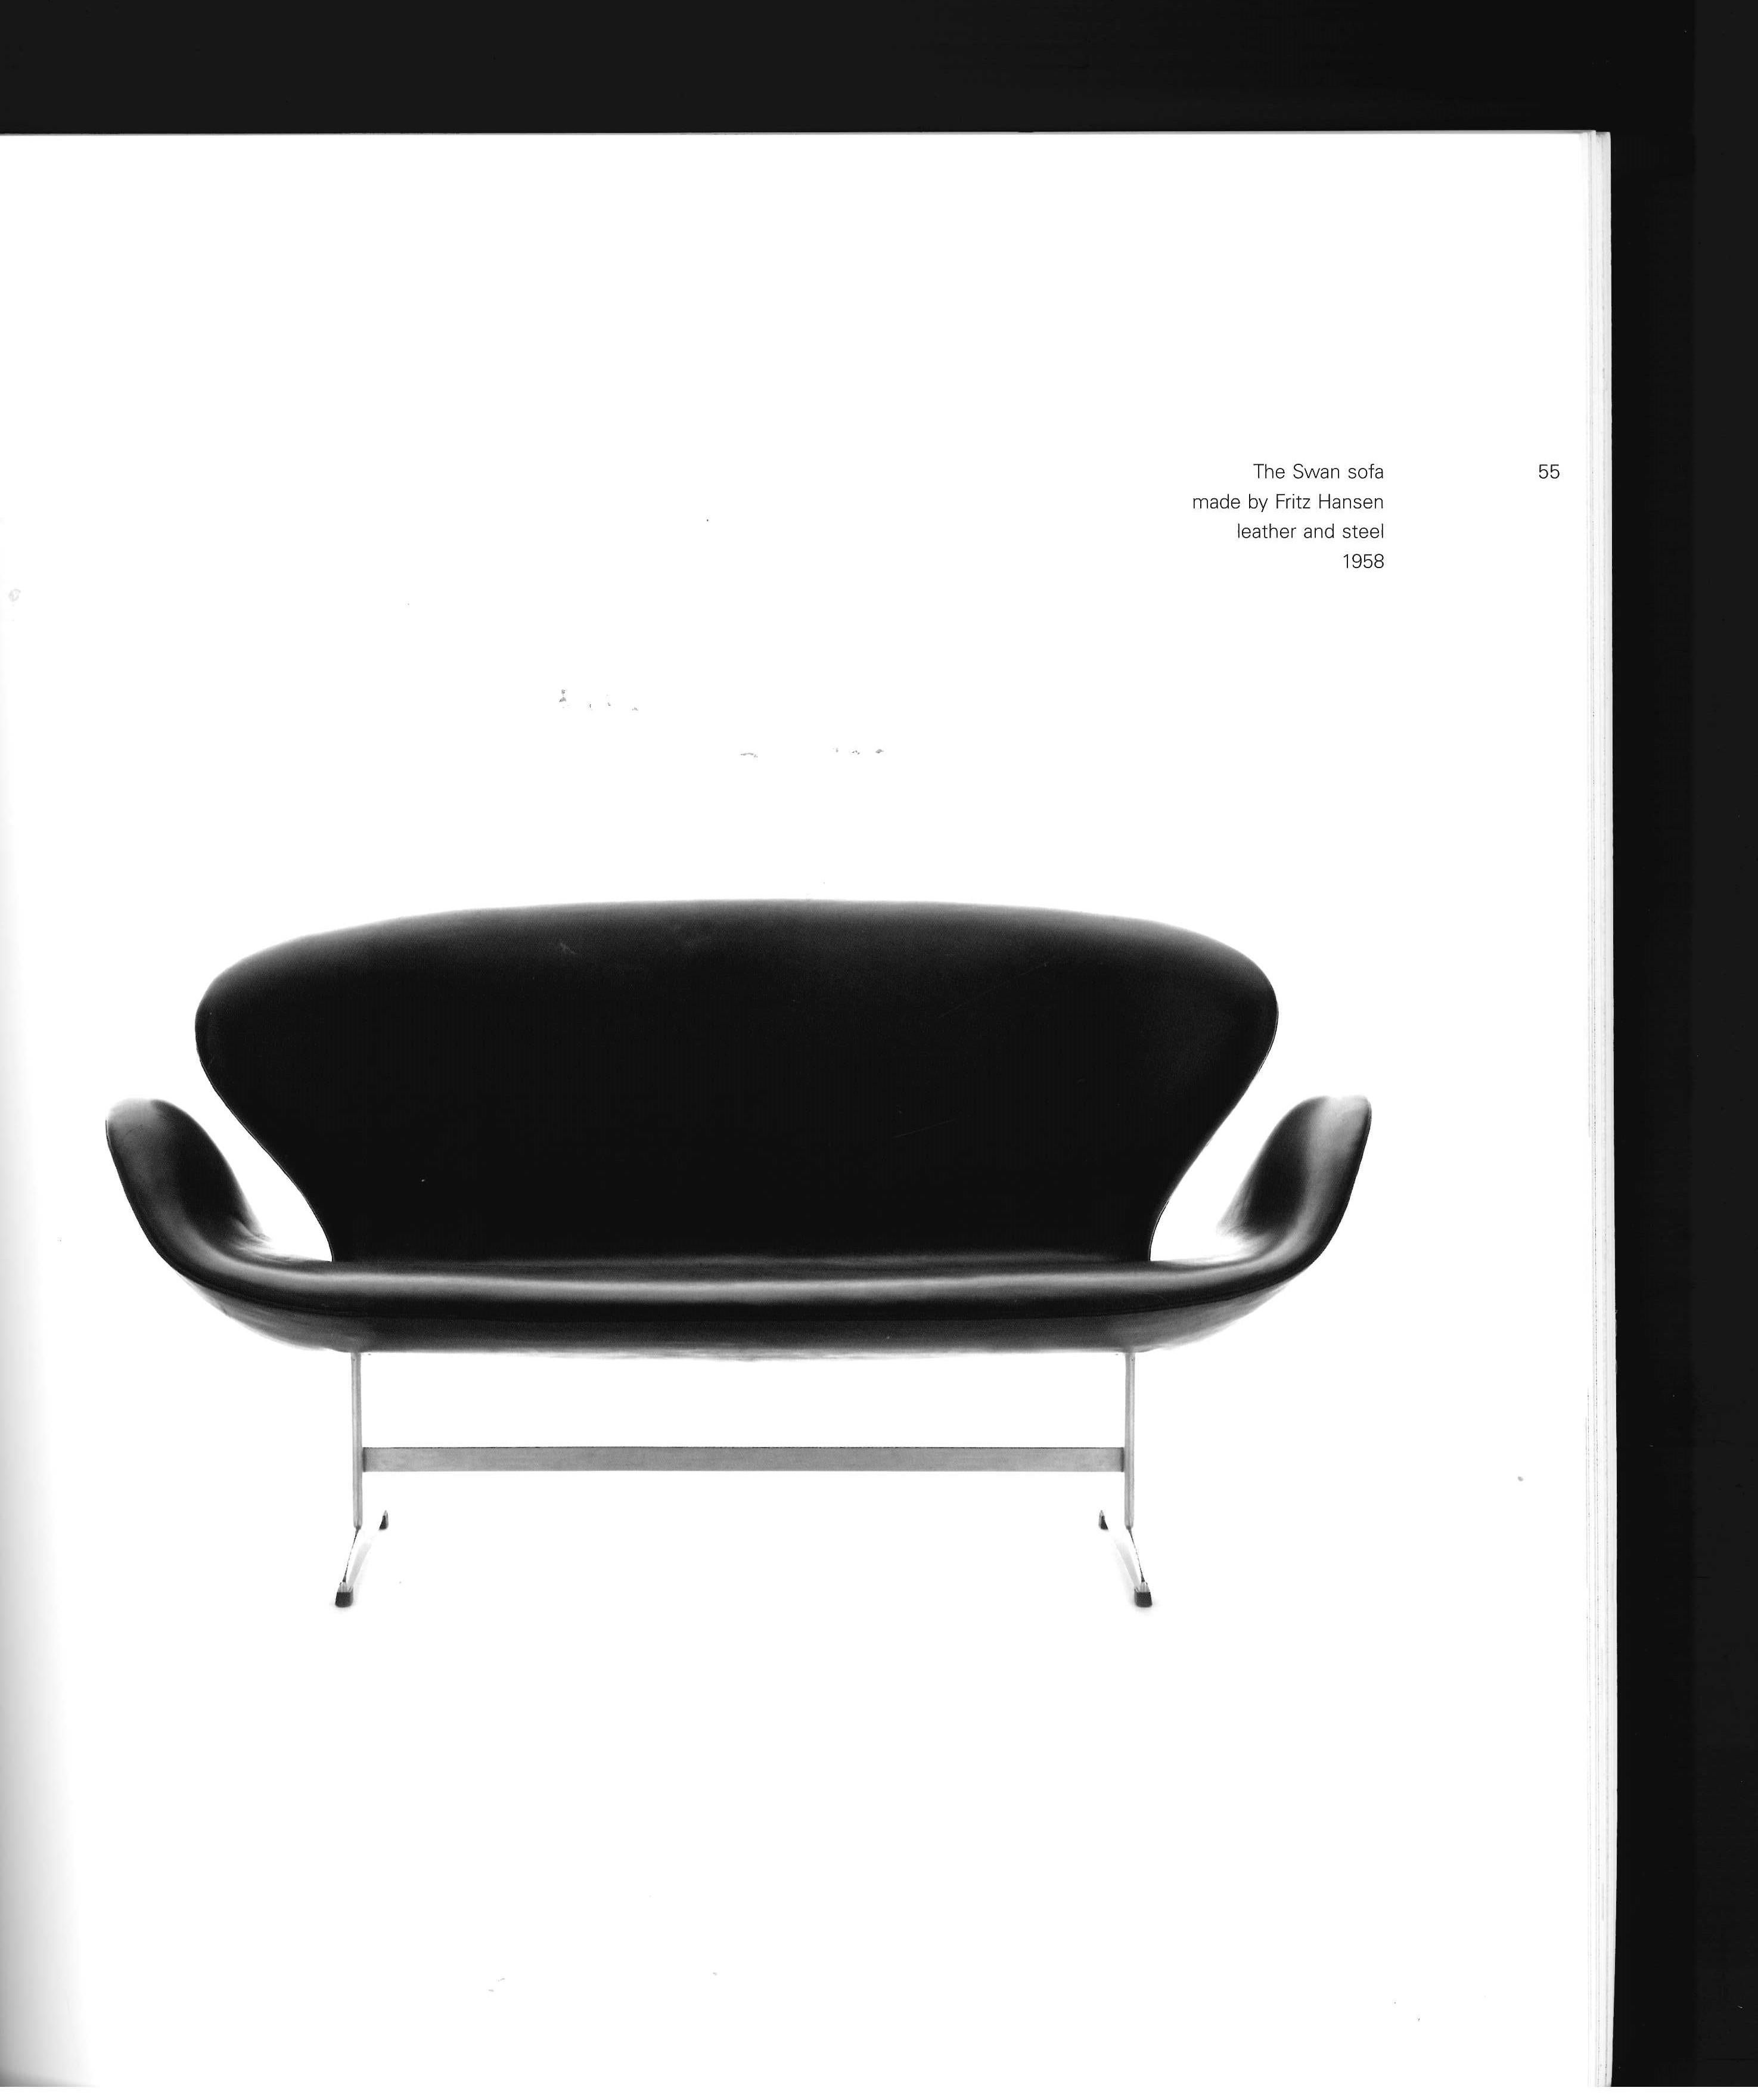 Arne Jacobsen Furniture Designs, Book 1